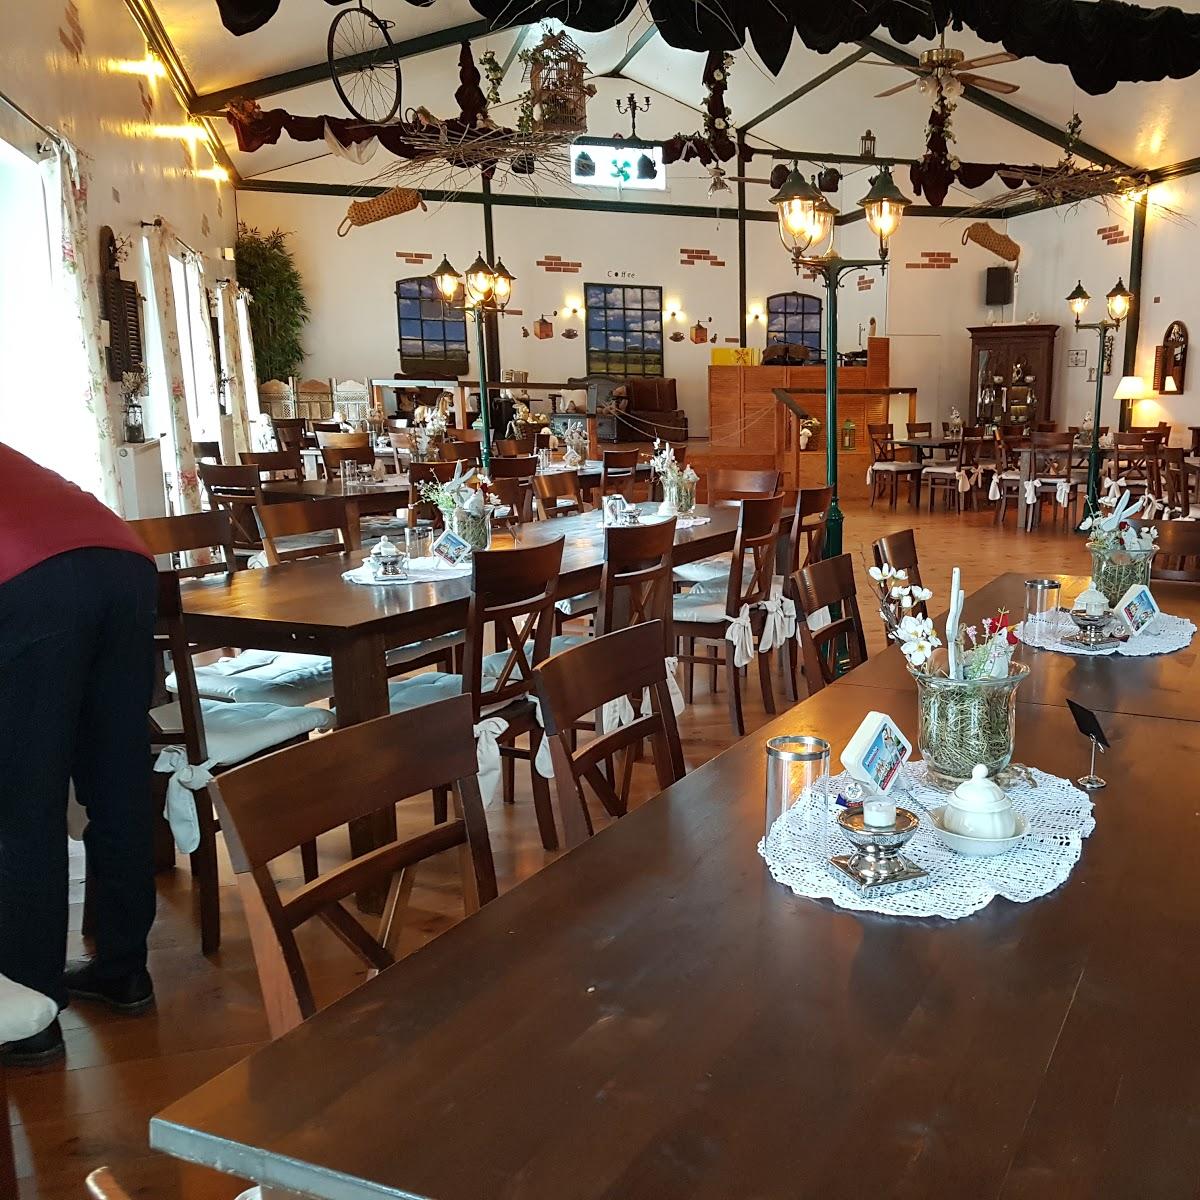 Restaurant "Cafe Marc" in Fockbek